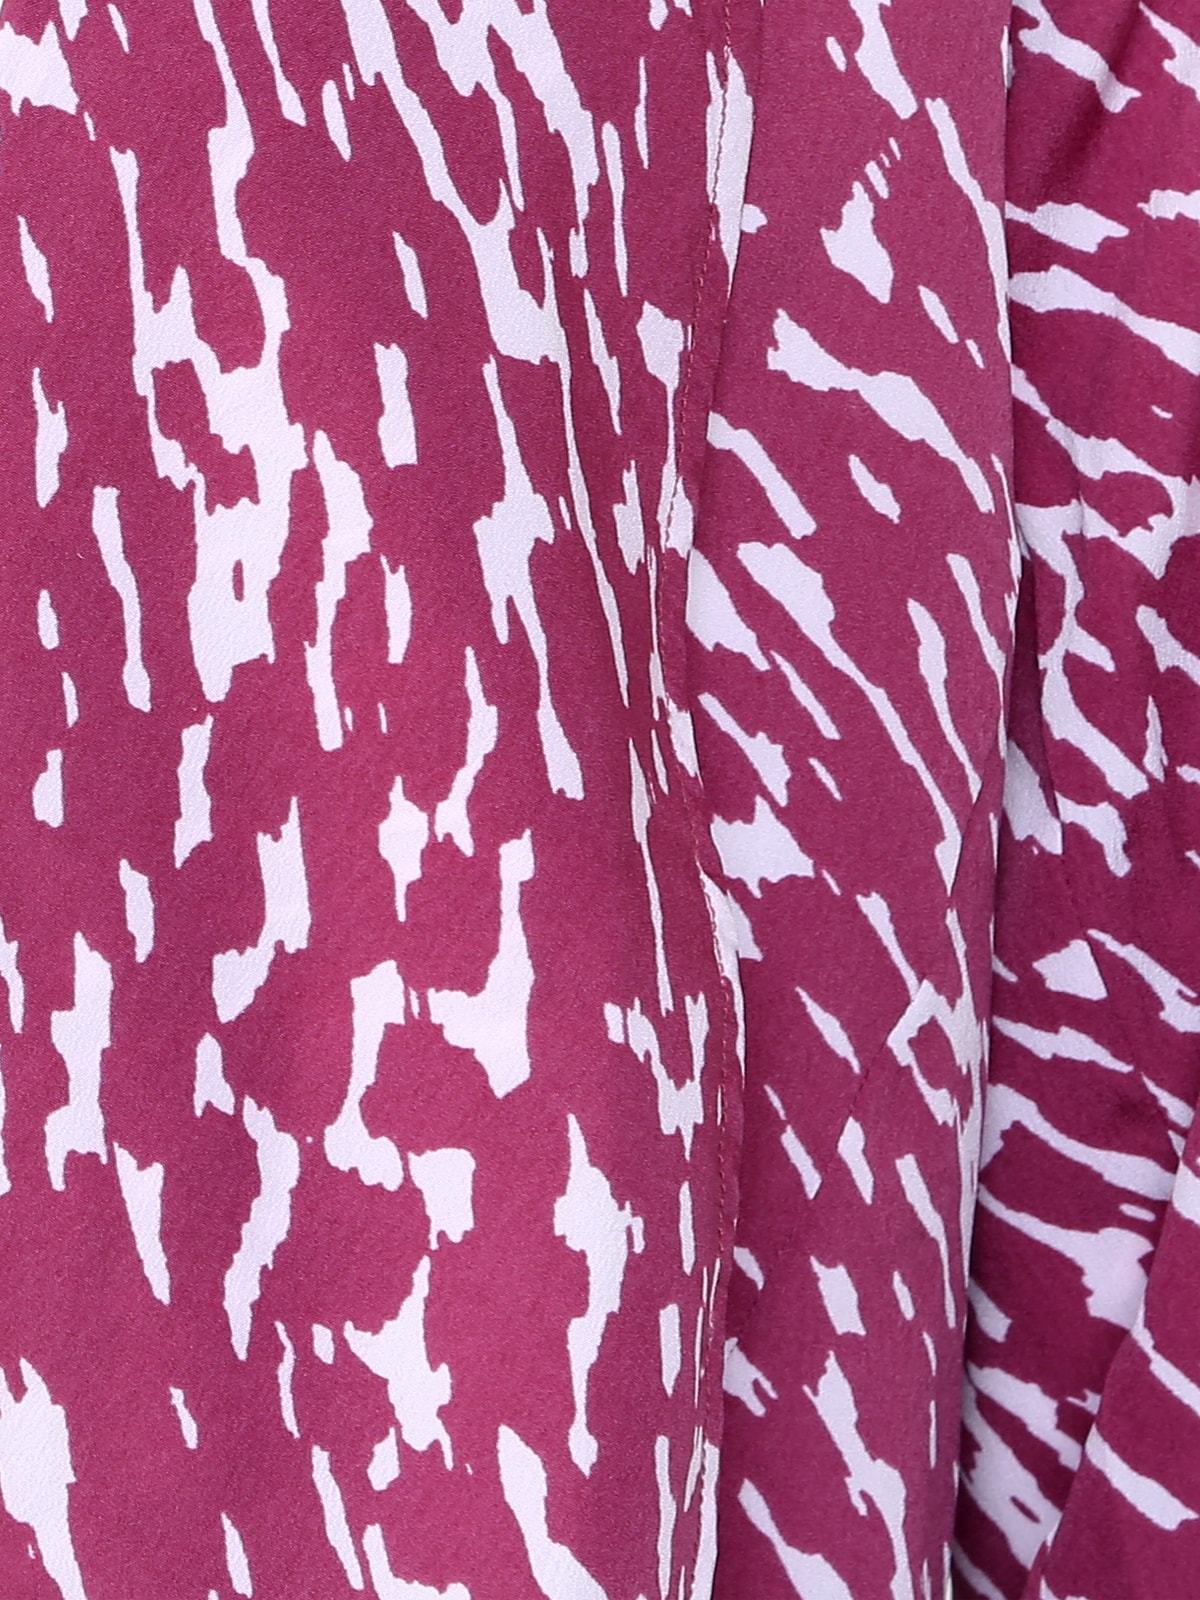 Women's Pink Printed Blazer - Pannkh